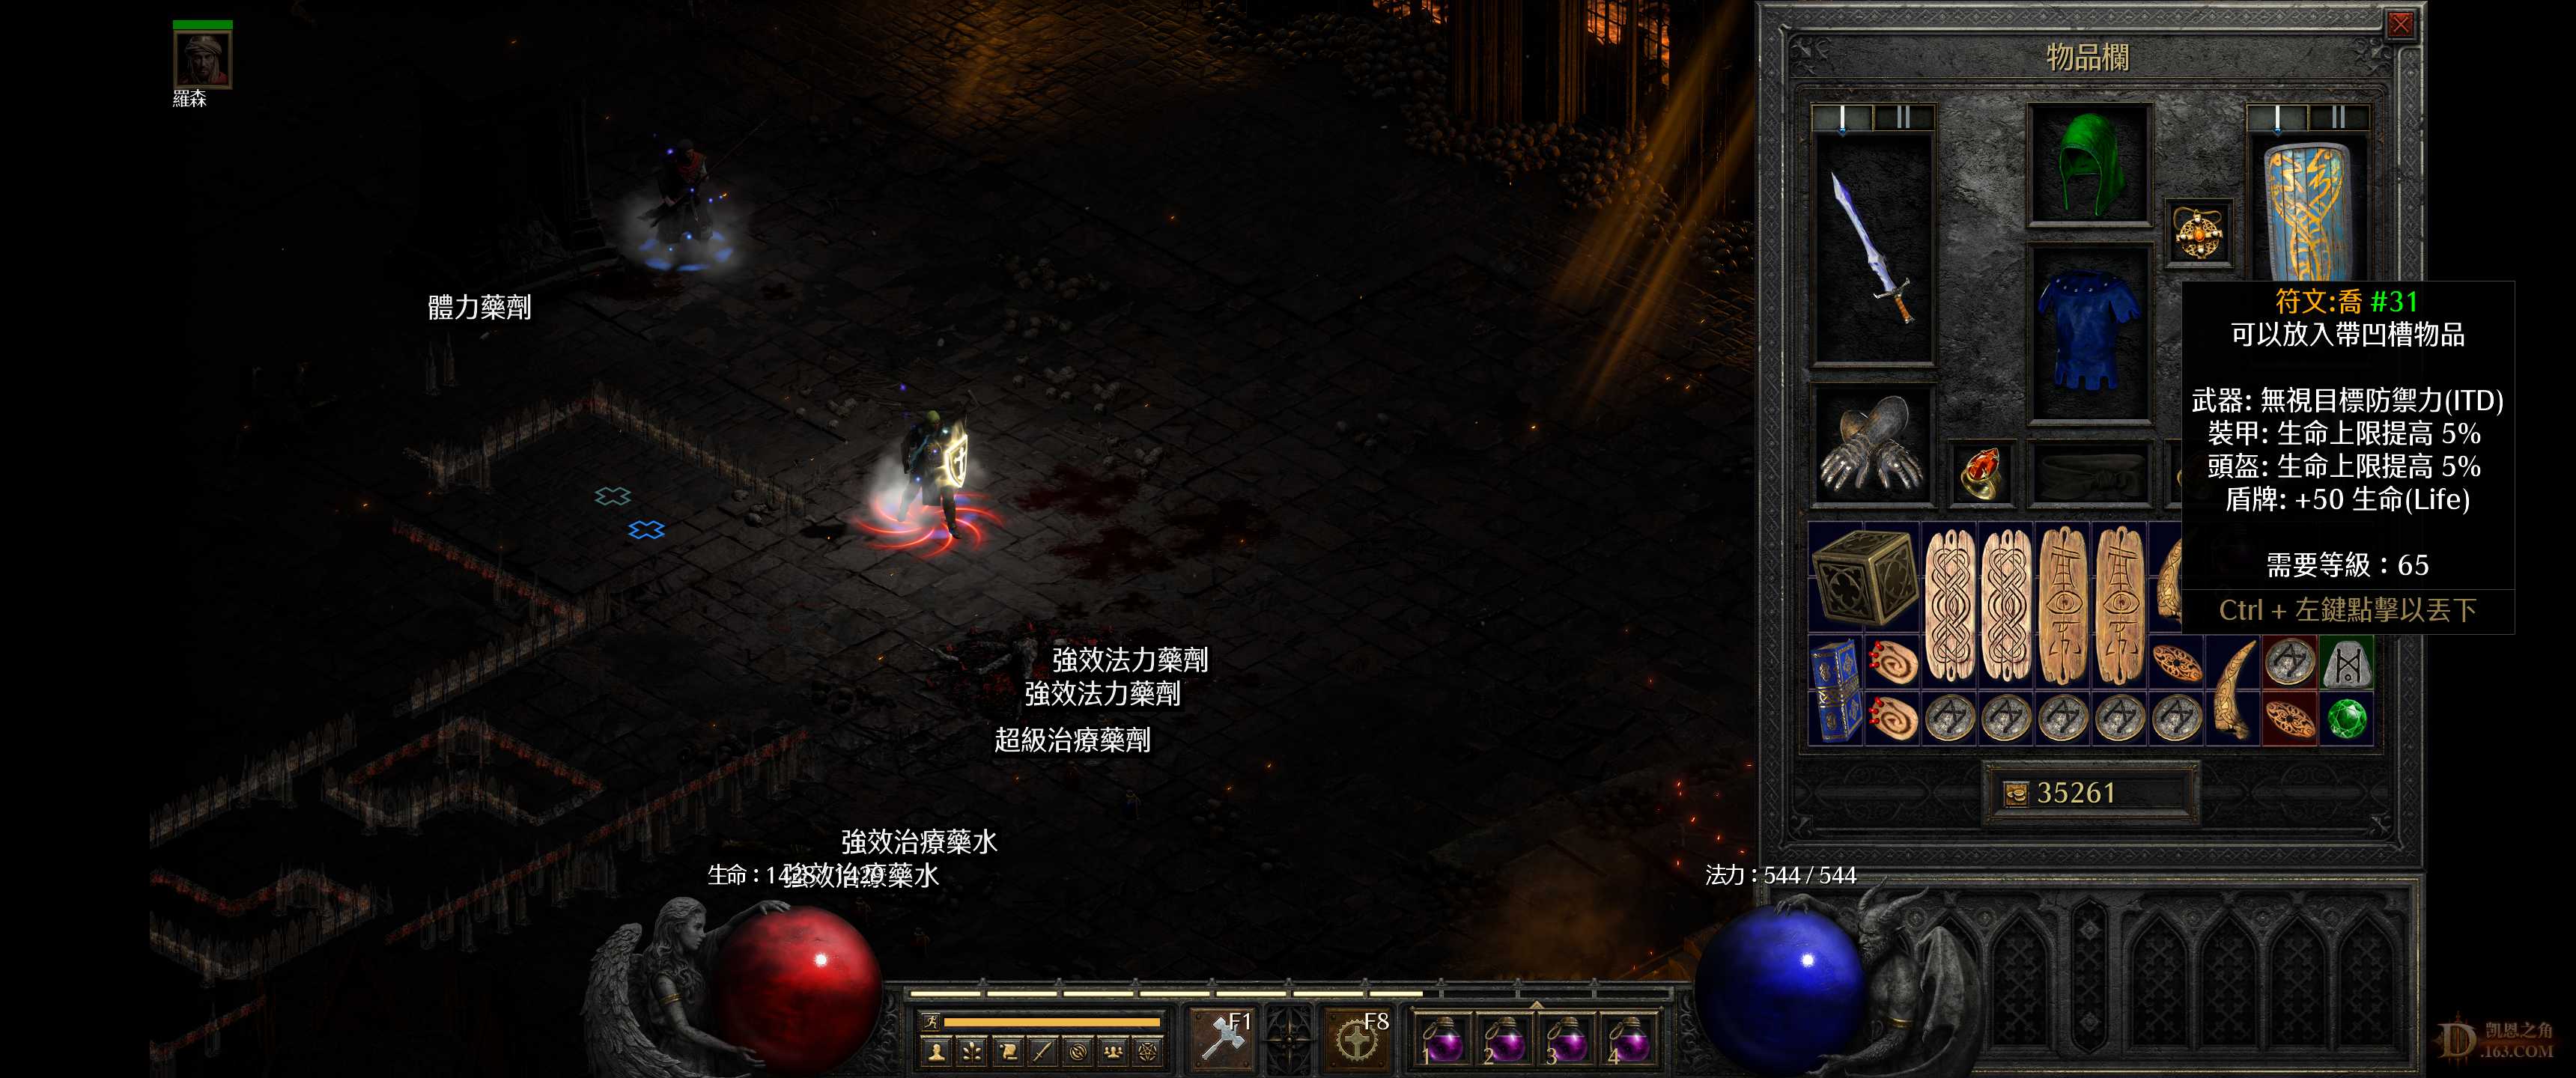 Diablo 2 Resurrected Screenshot 2021.10.22 - 23.40.33.88.png